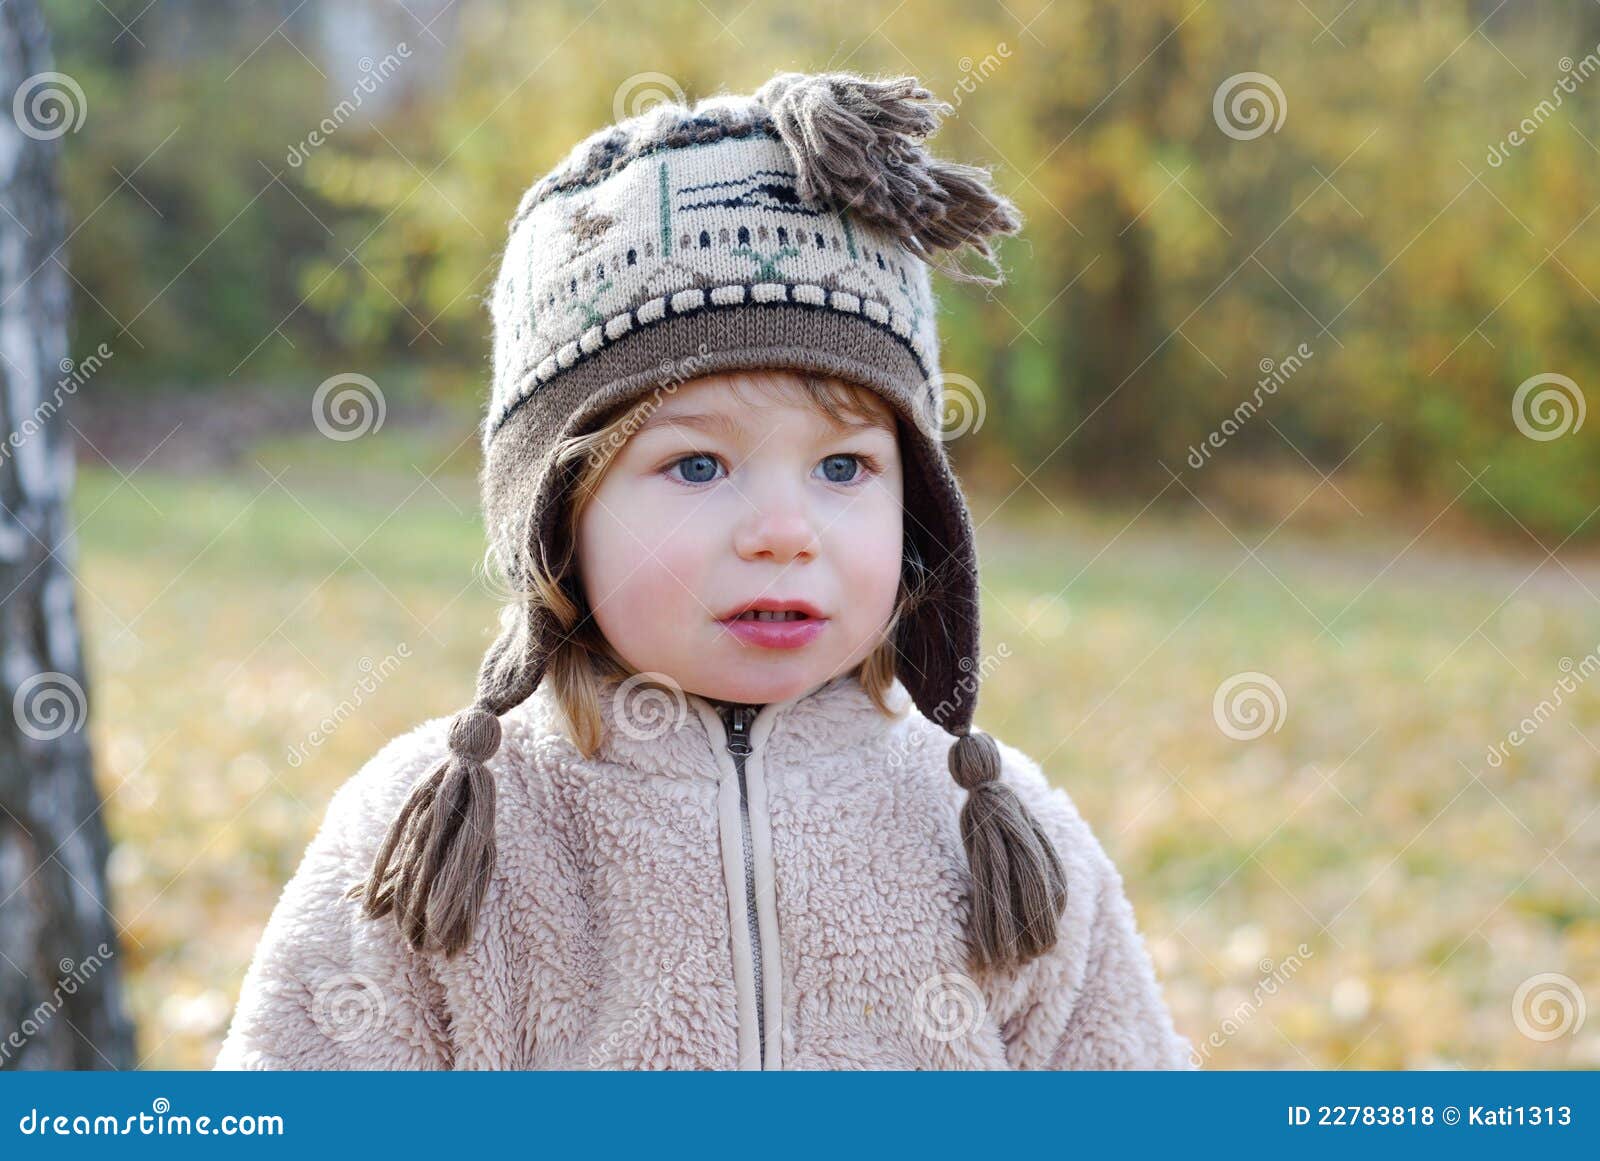 Smiling girl stock photo. Image of caucasian, child, childhood - 22783818